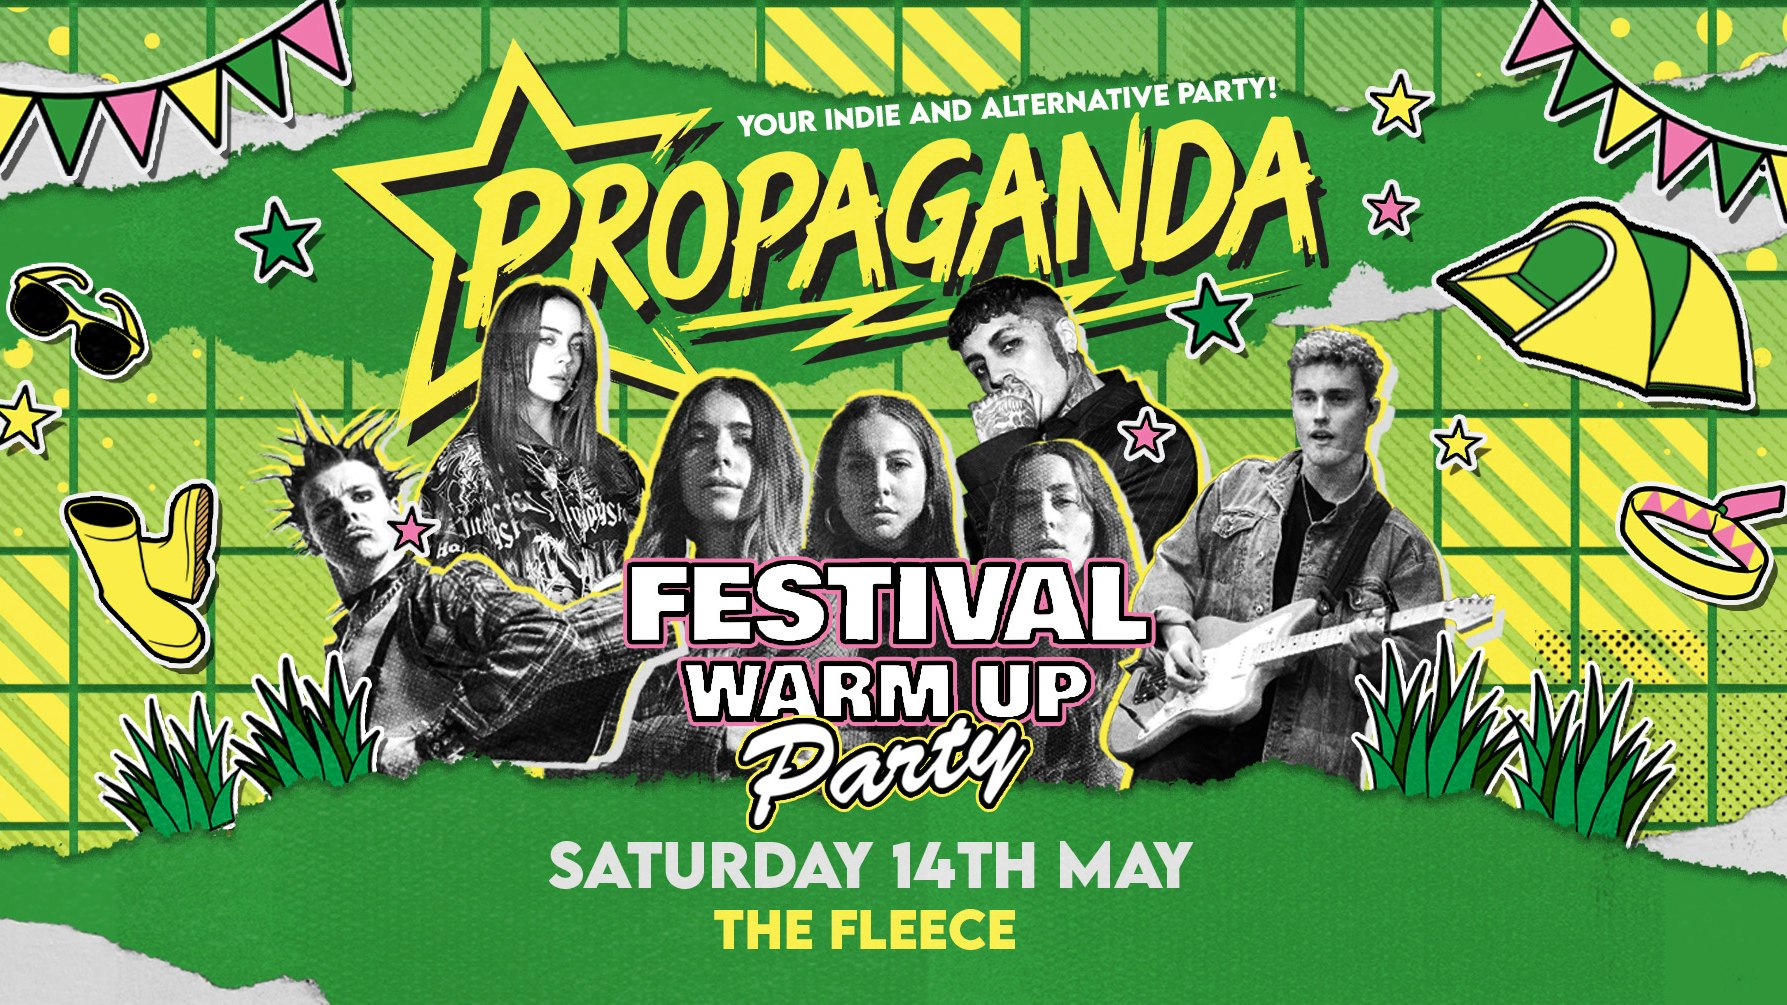 Propaganda Bristol – Festival Warm Up Party!